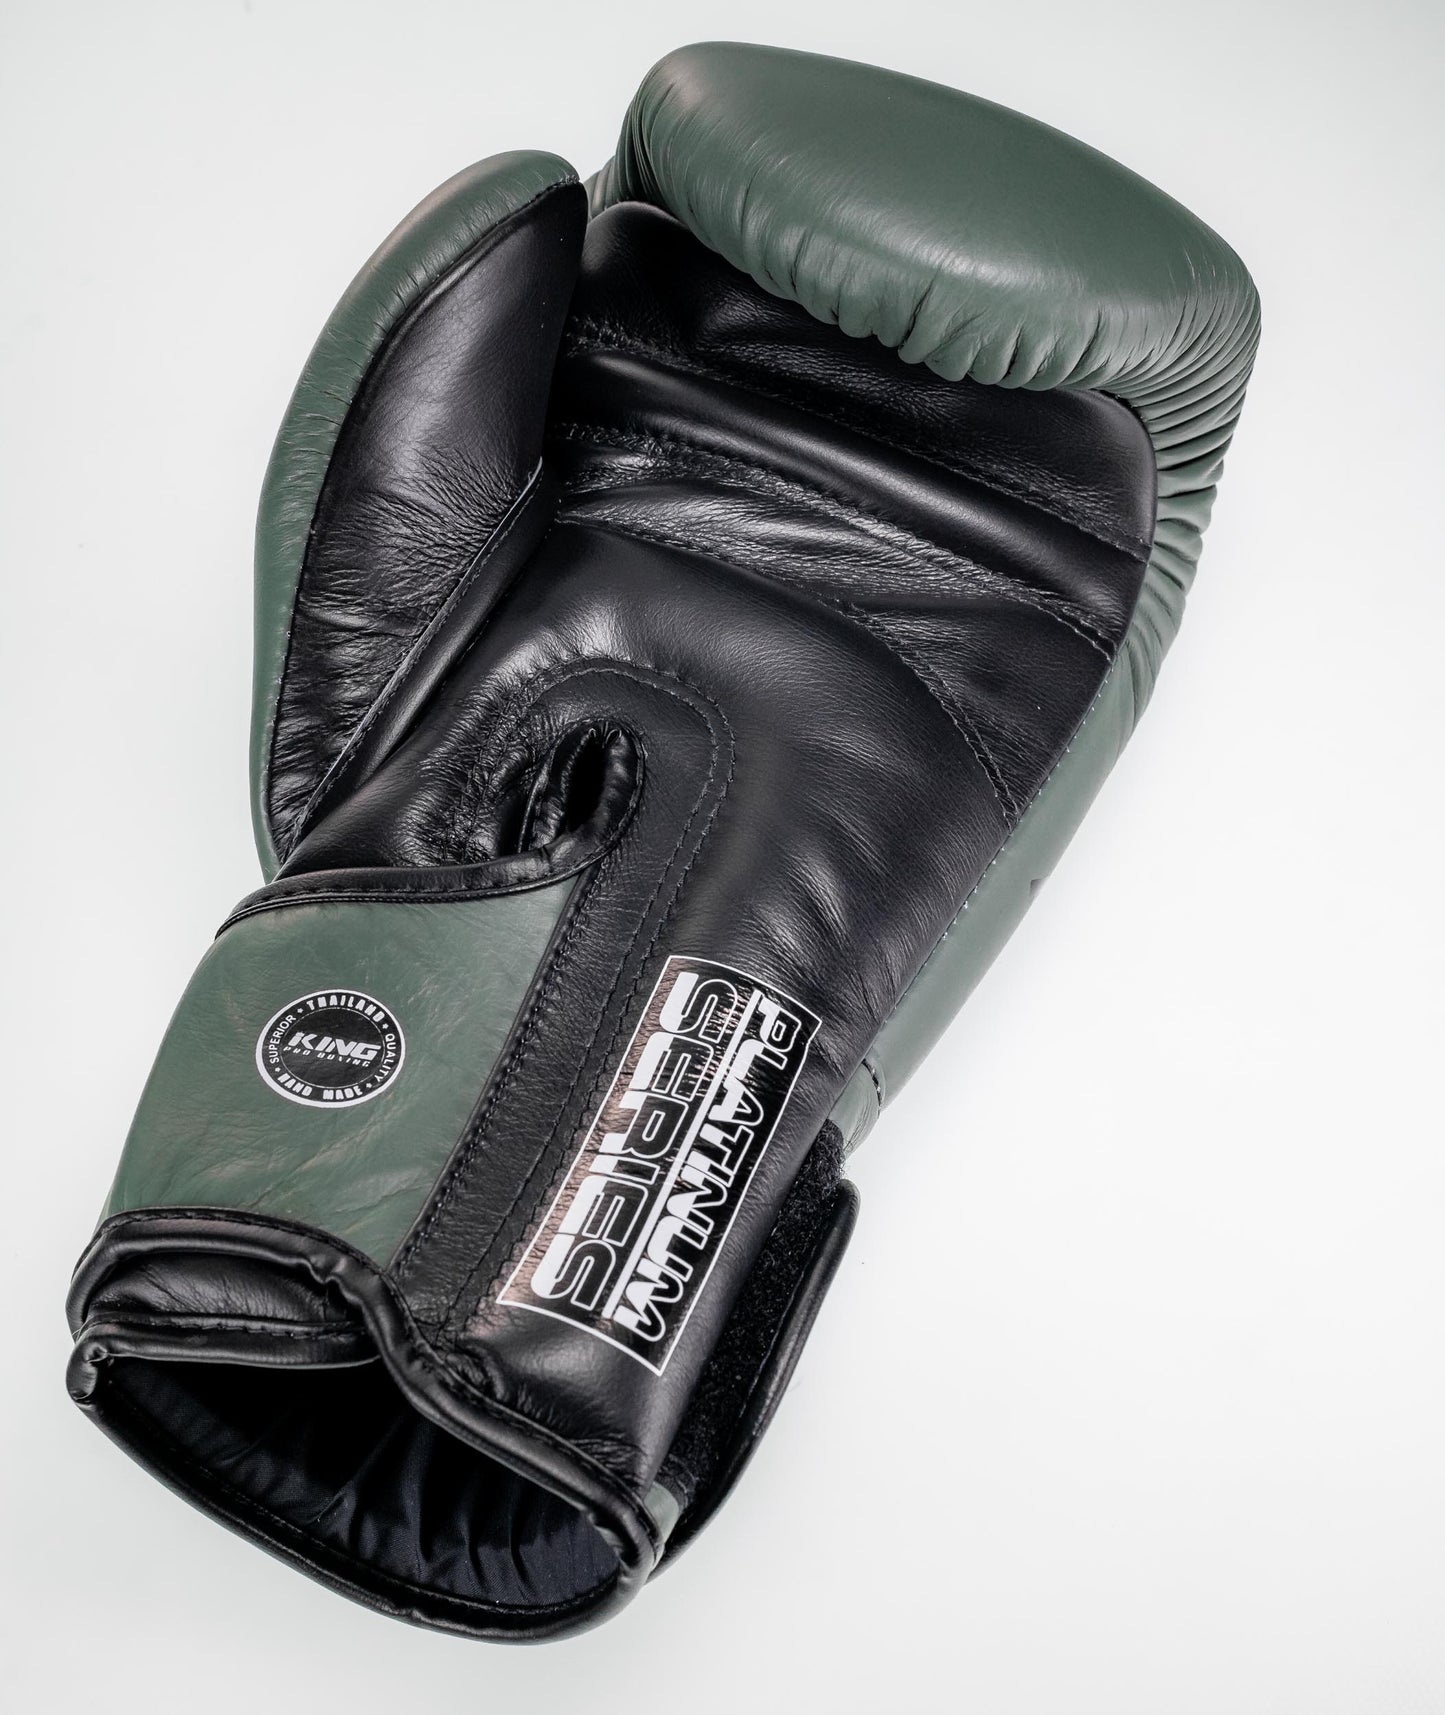 King Pro - Boxing Gloves Platinum 3